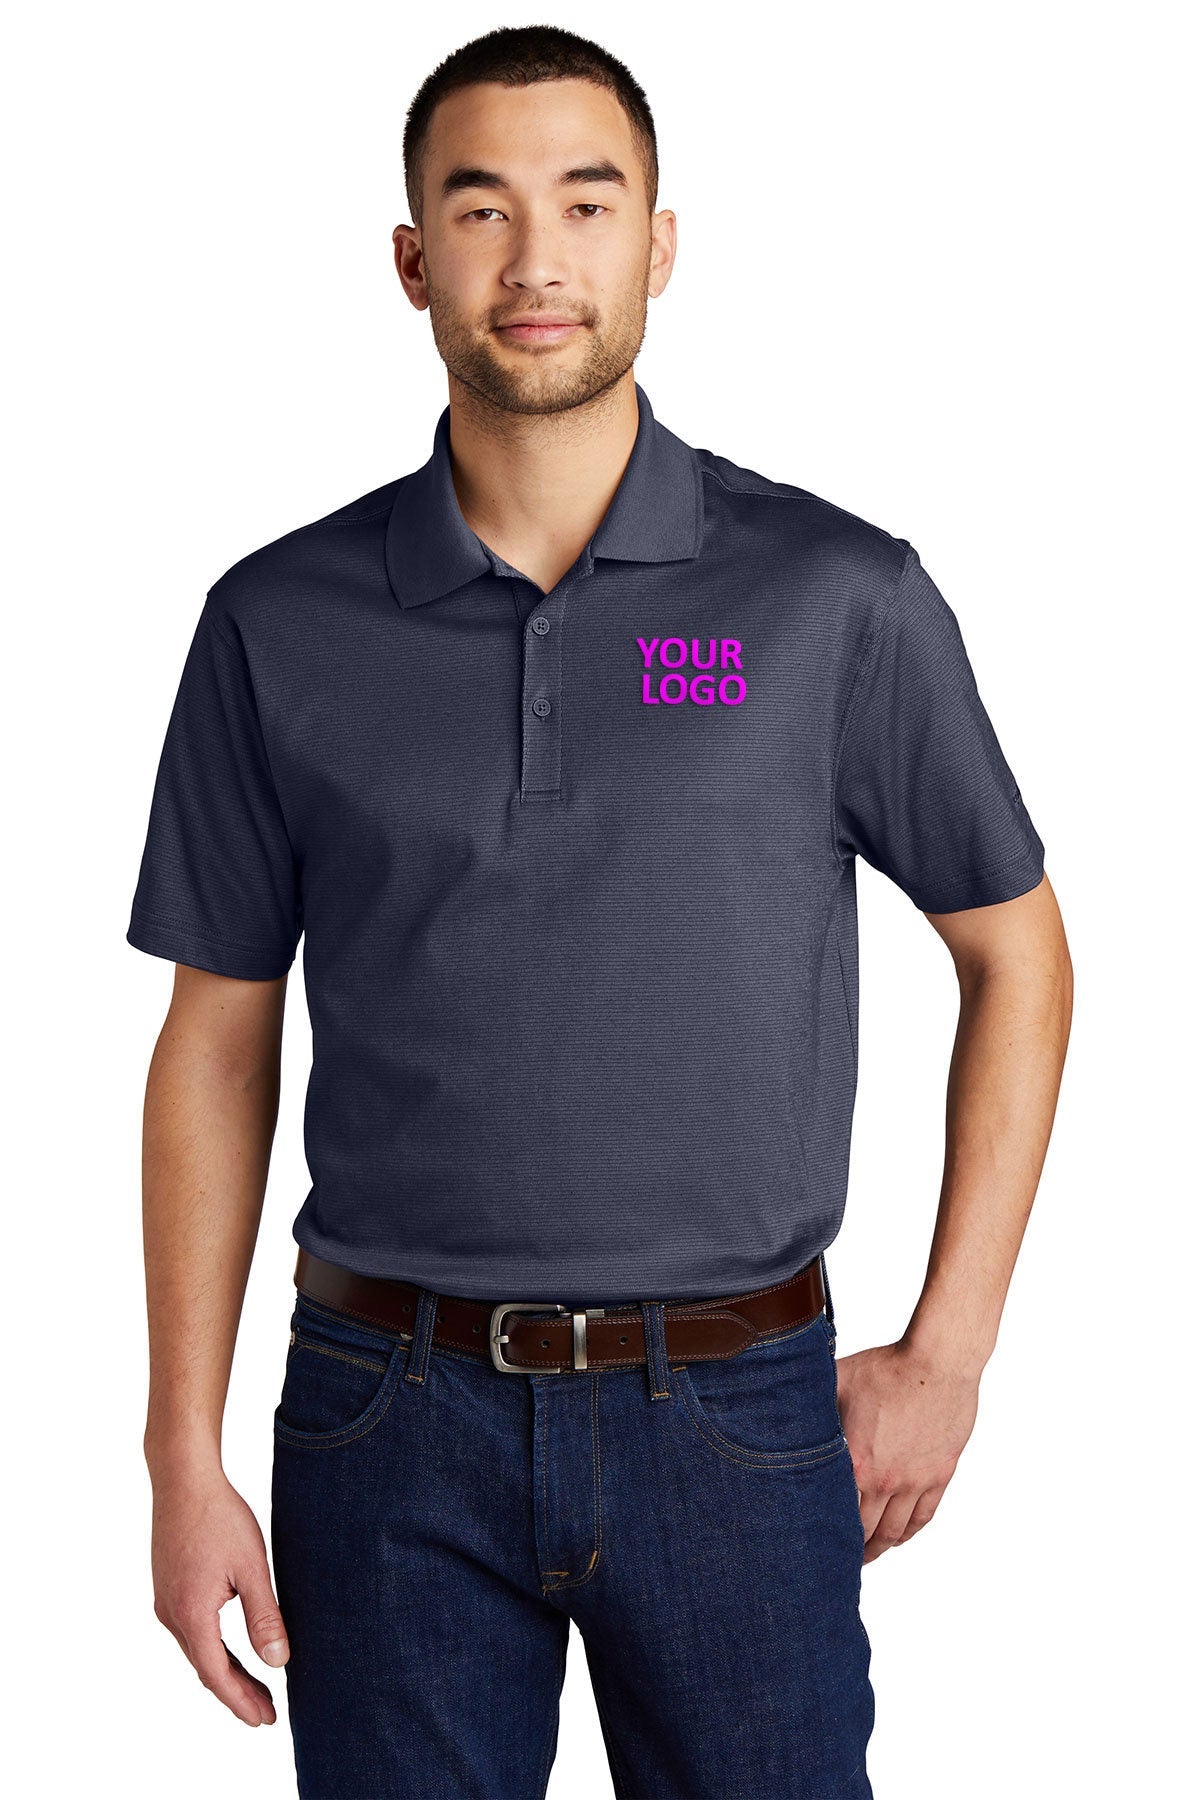 Eddie Bauer Navy EB102 custom women's polo shirts